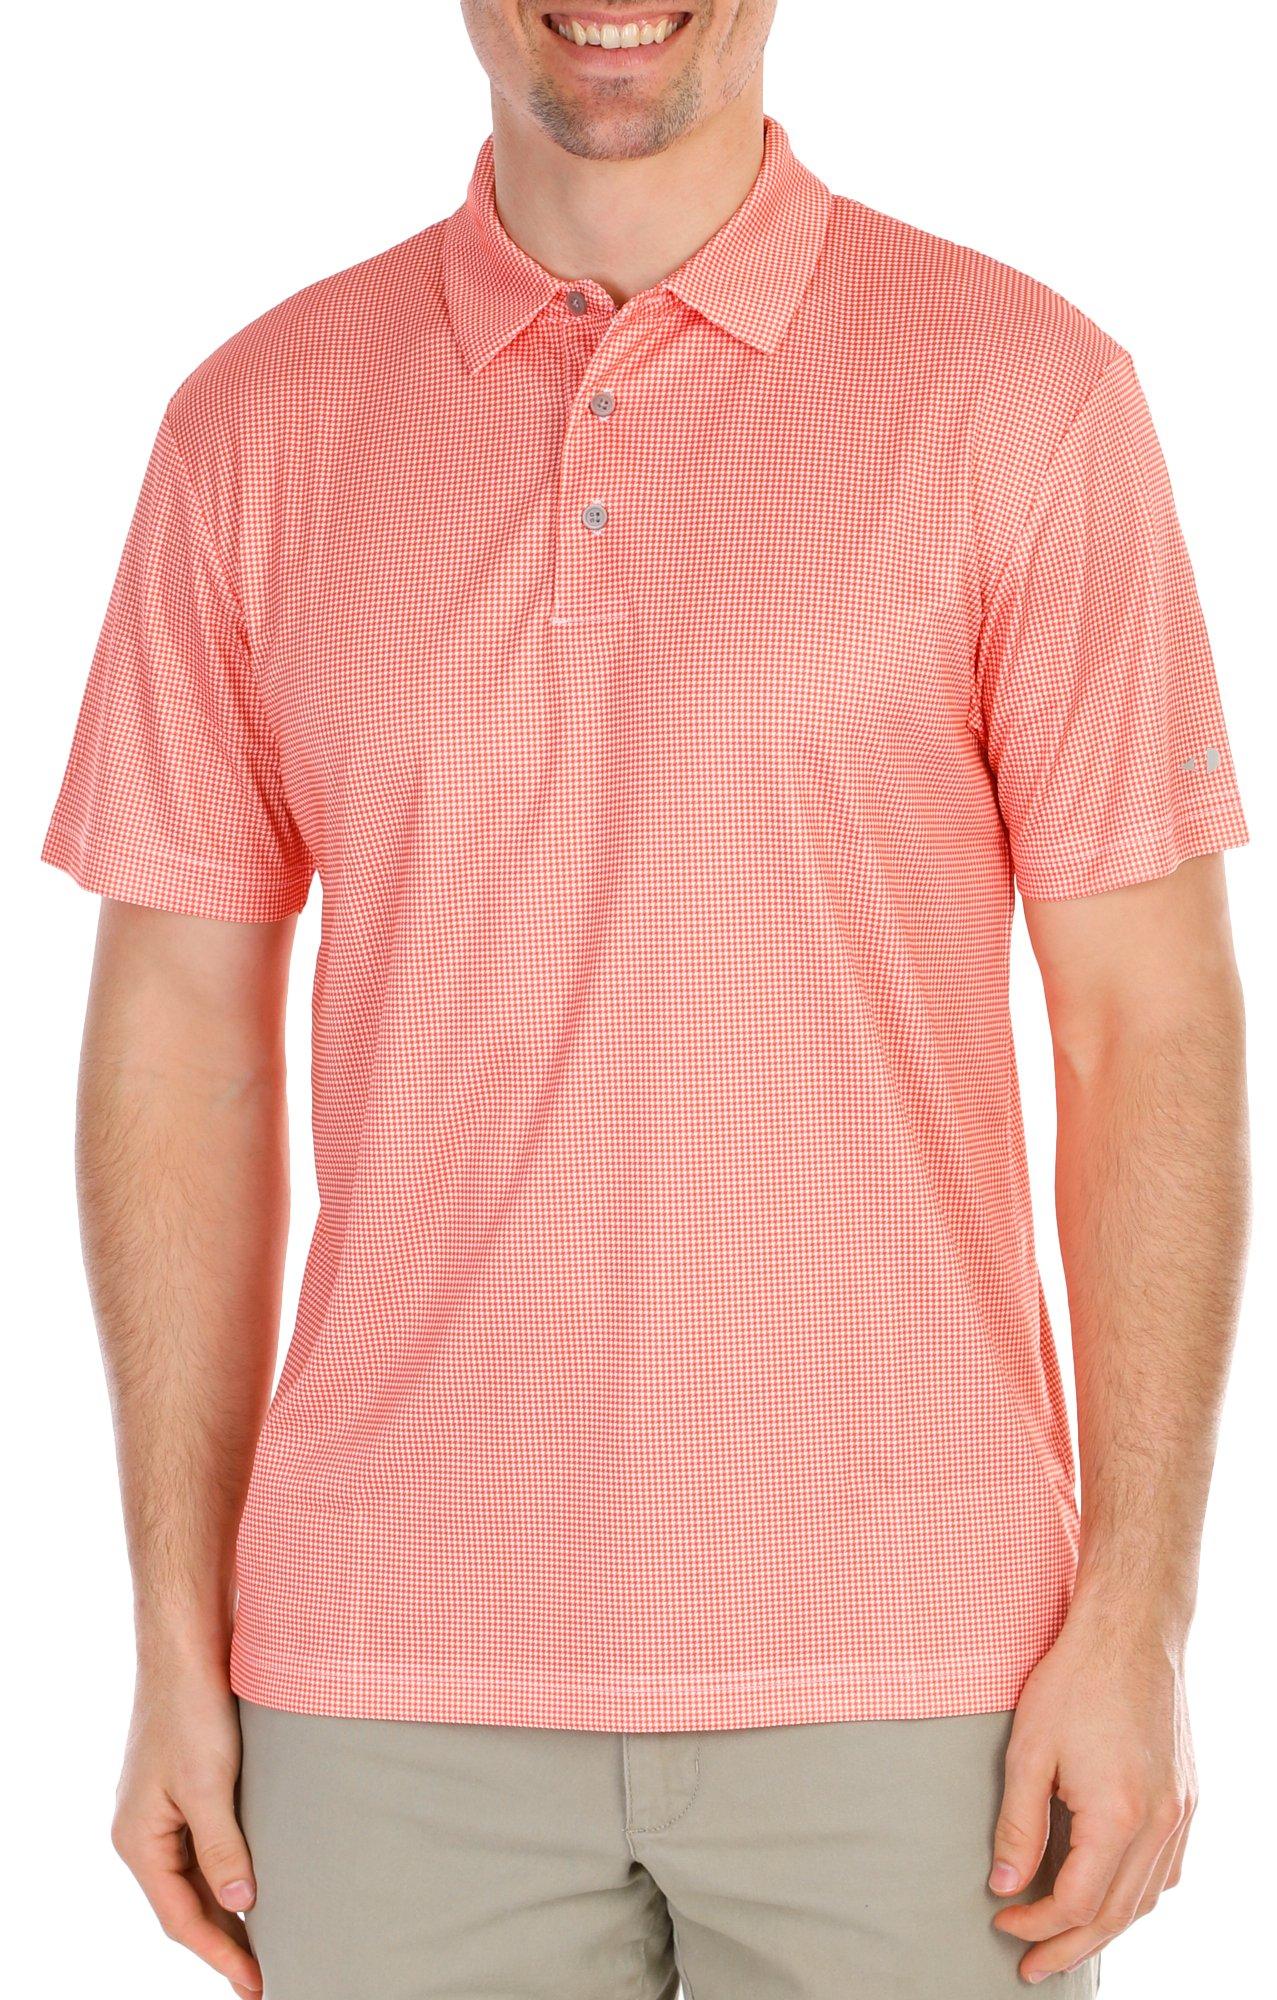 Men's Solid Golf Polo Shirt